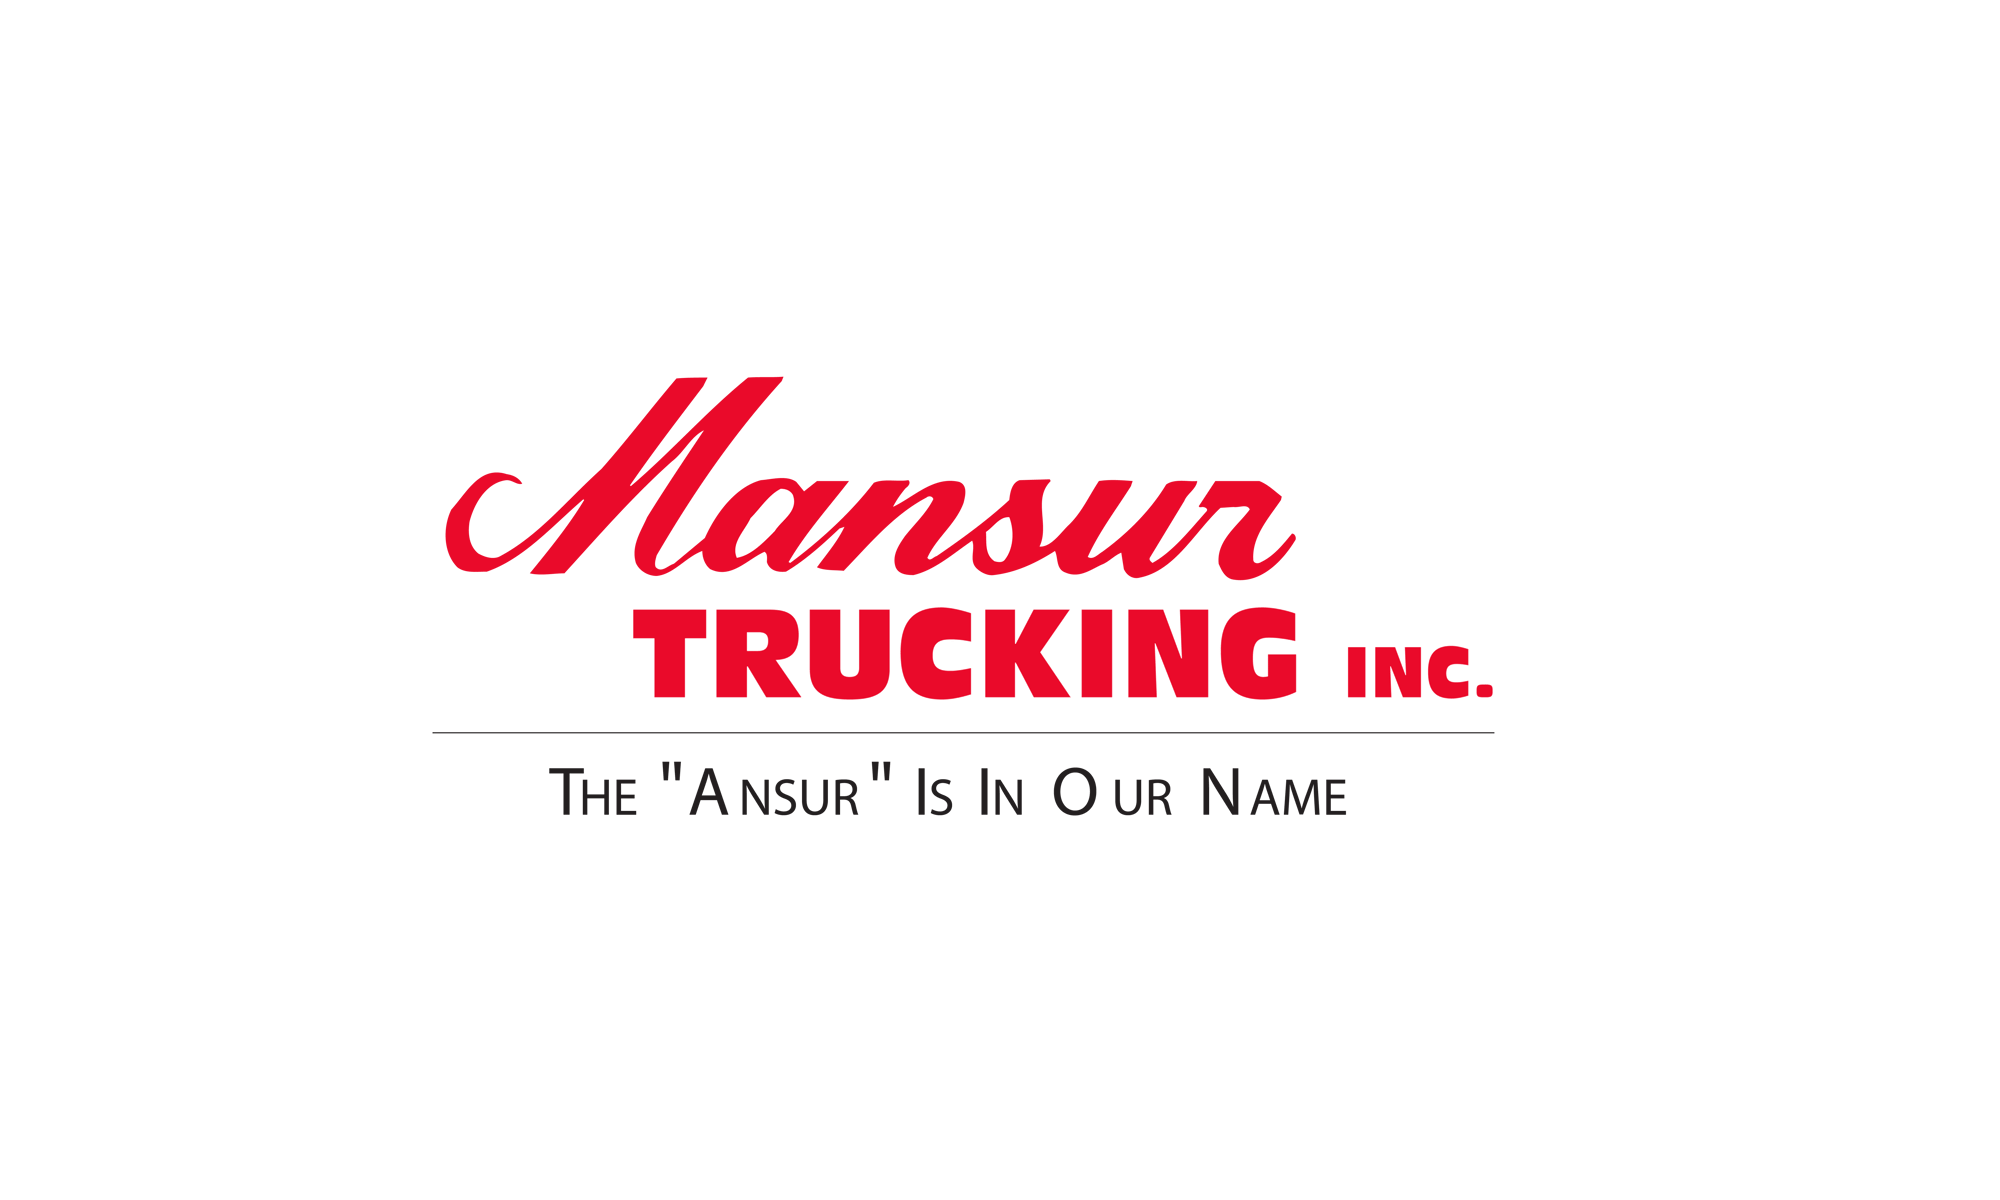 Mansur Trucking logo resized